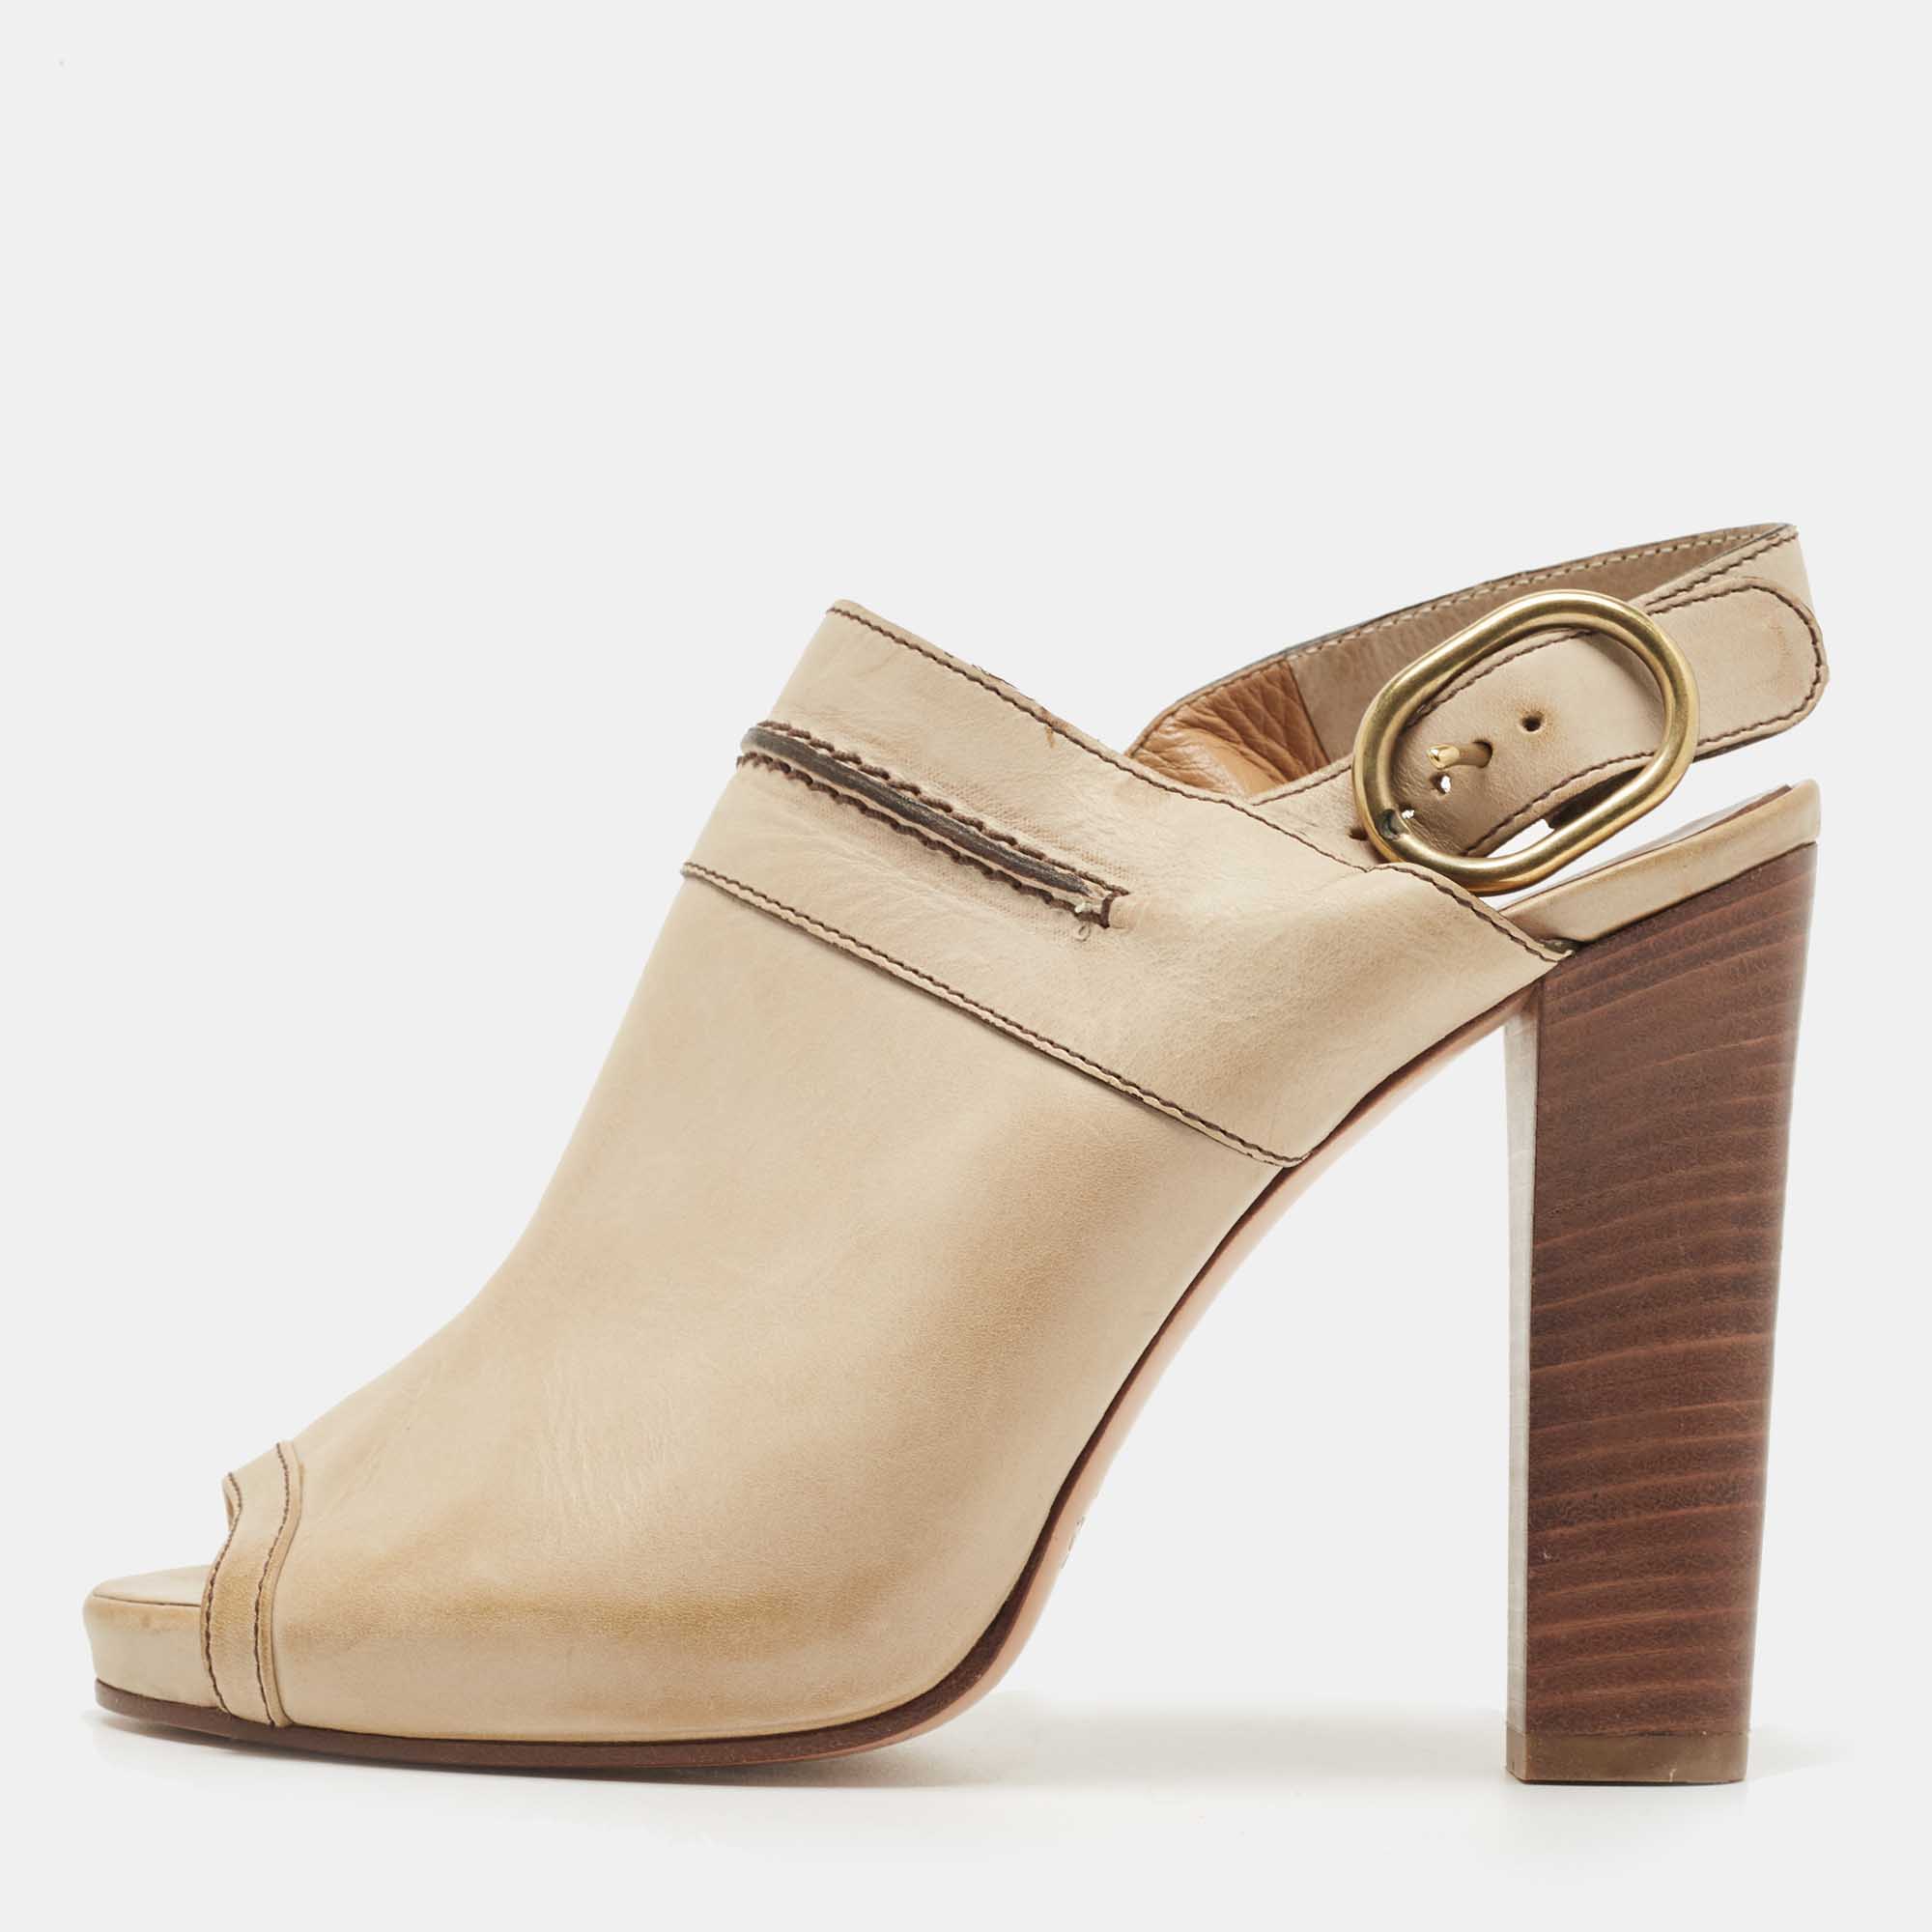 Chloe Beige Leather Peep Toe Slingback Sandals Size 37